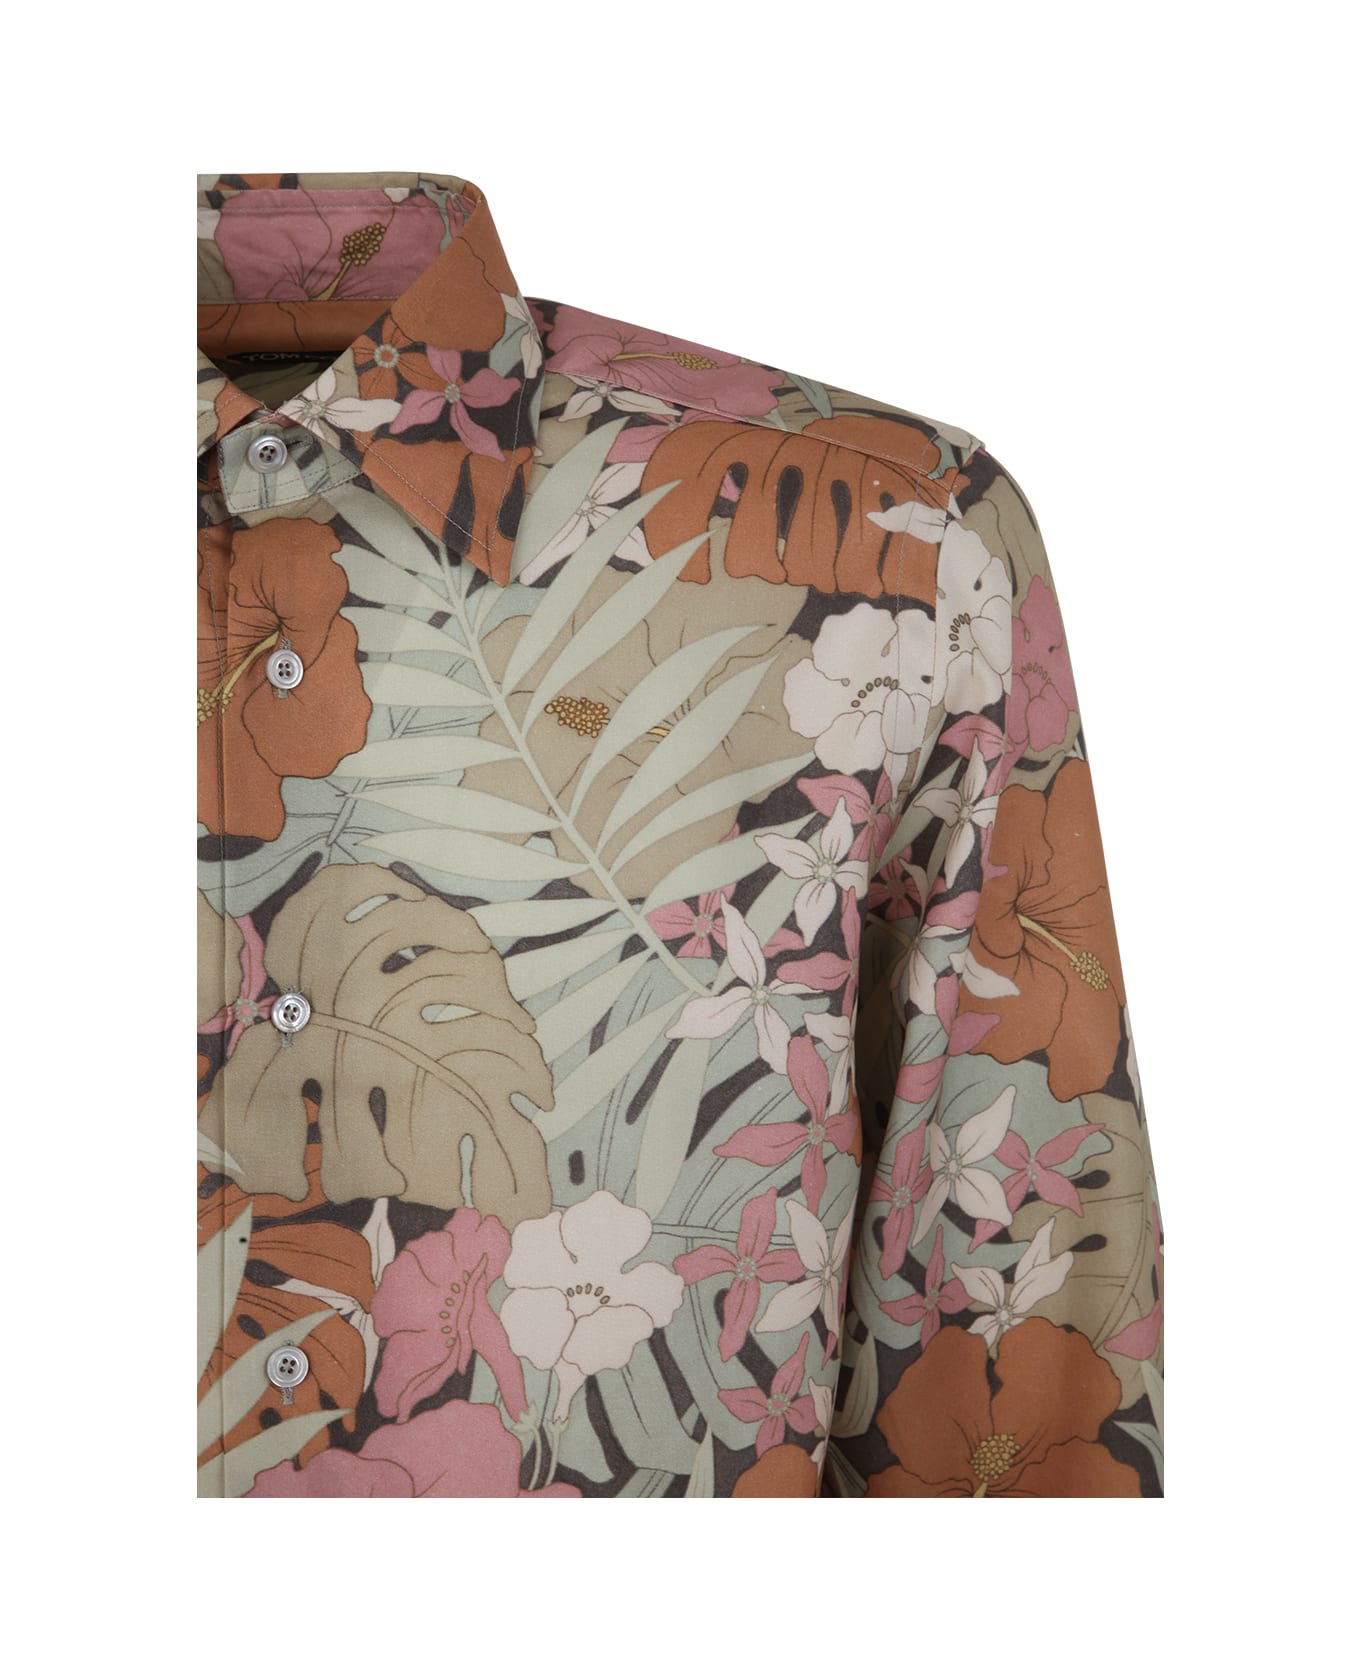 Tom Ford Leisure Man Shirt - Zfgdp Combo Sage Antique Pink